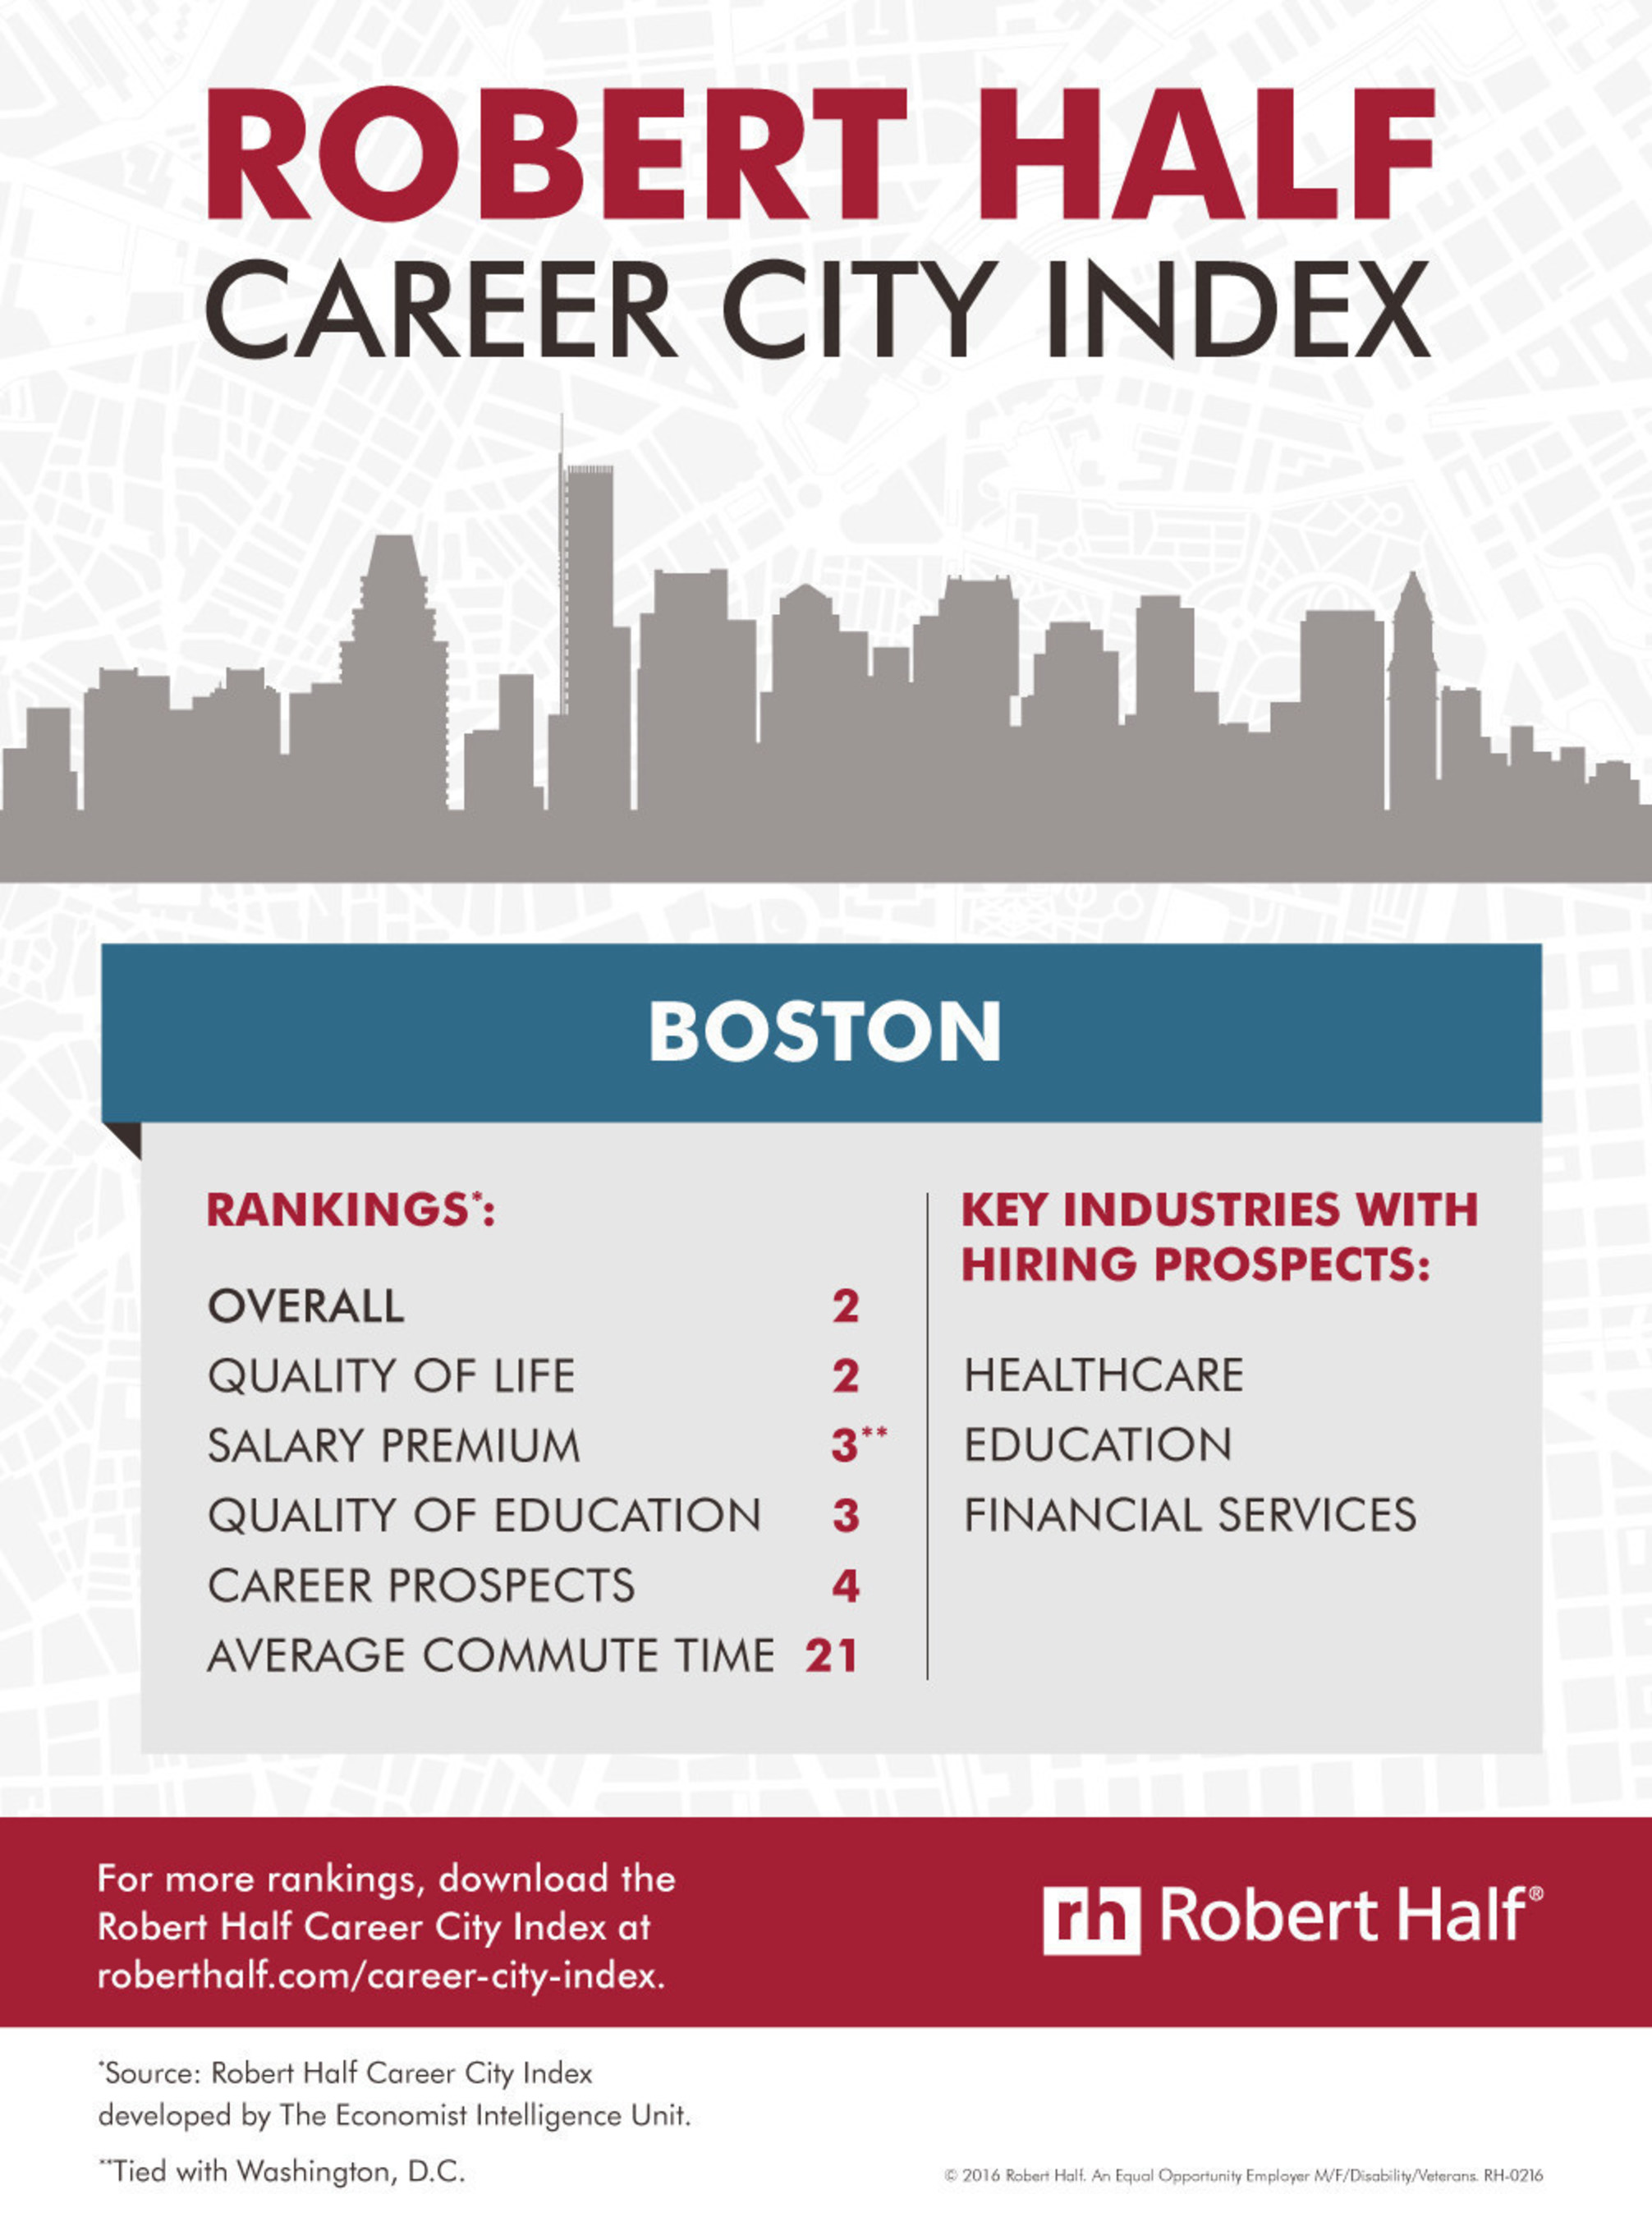 Boston Career City Index Rankings